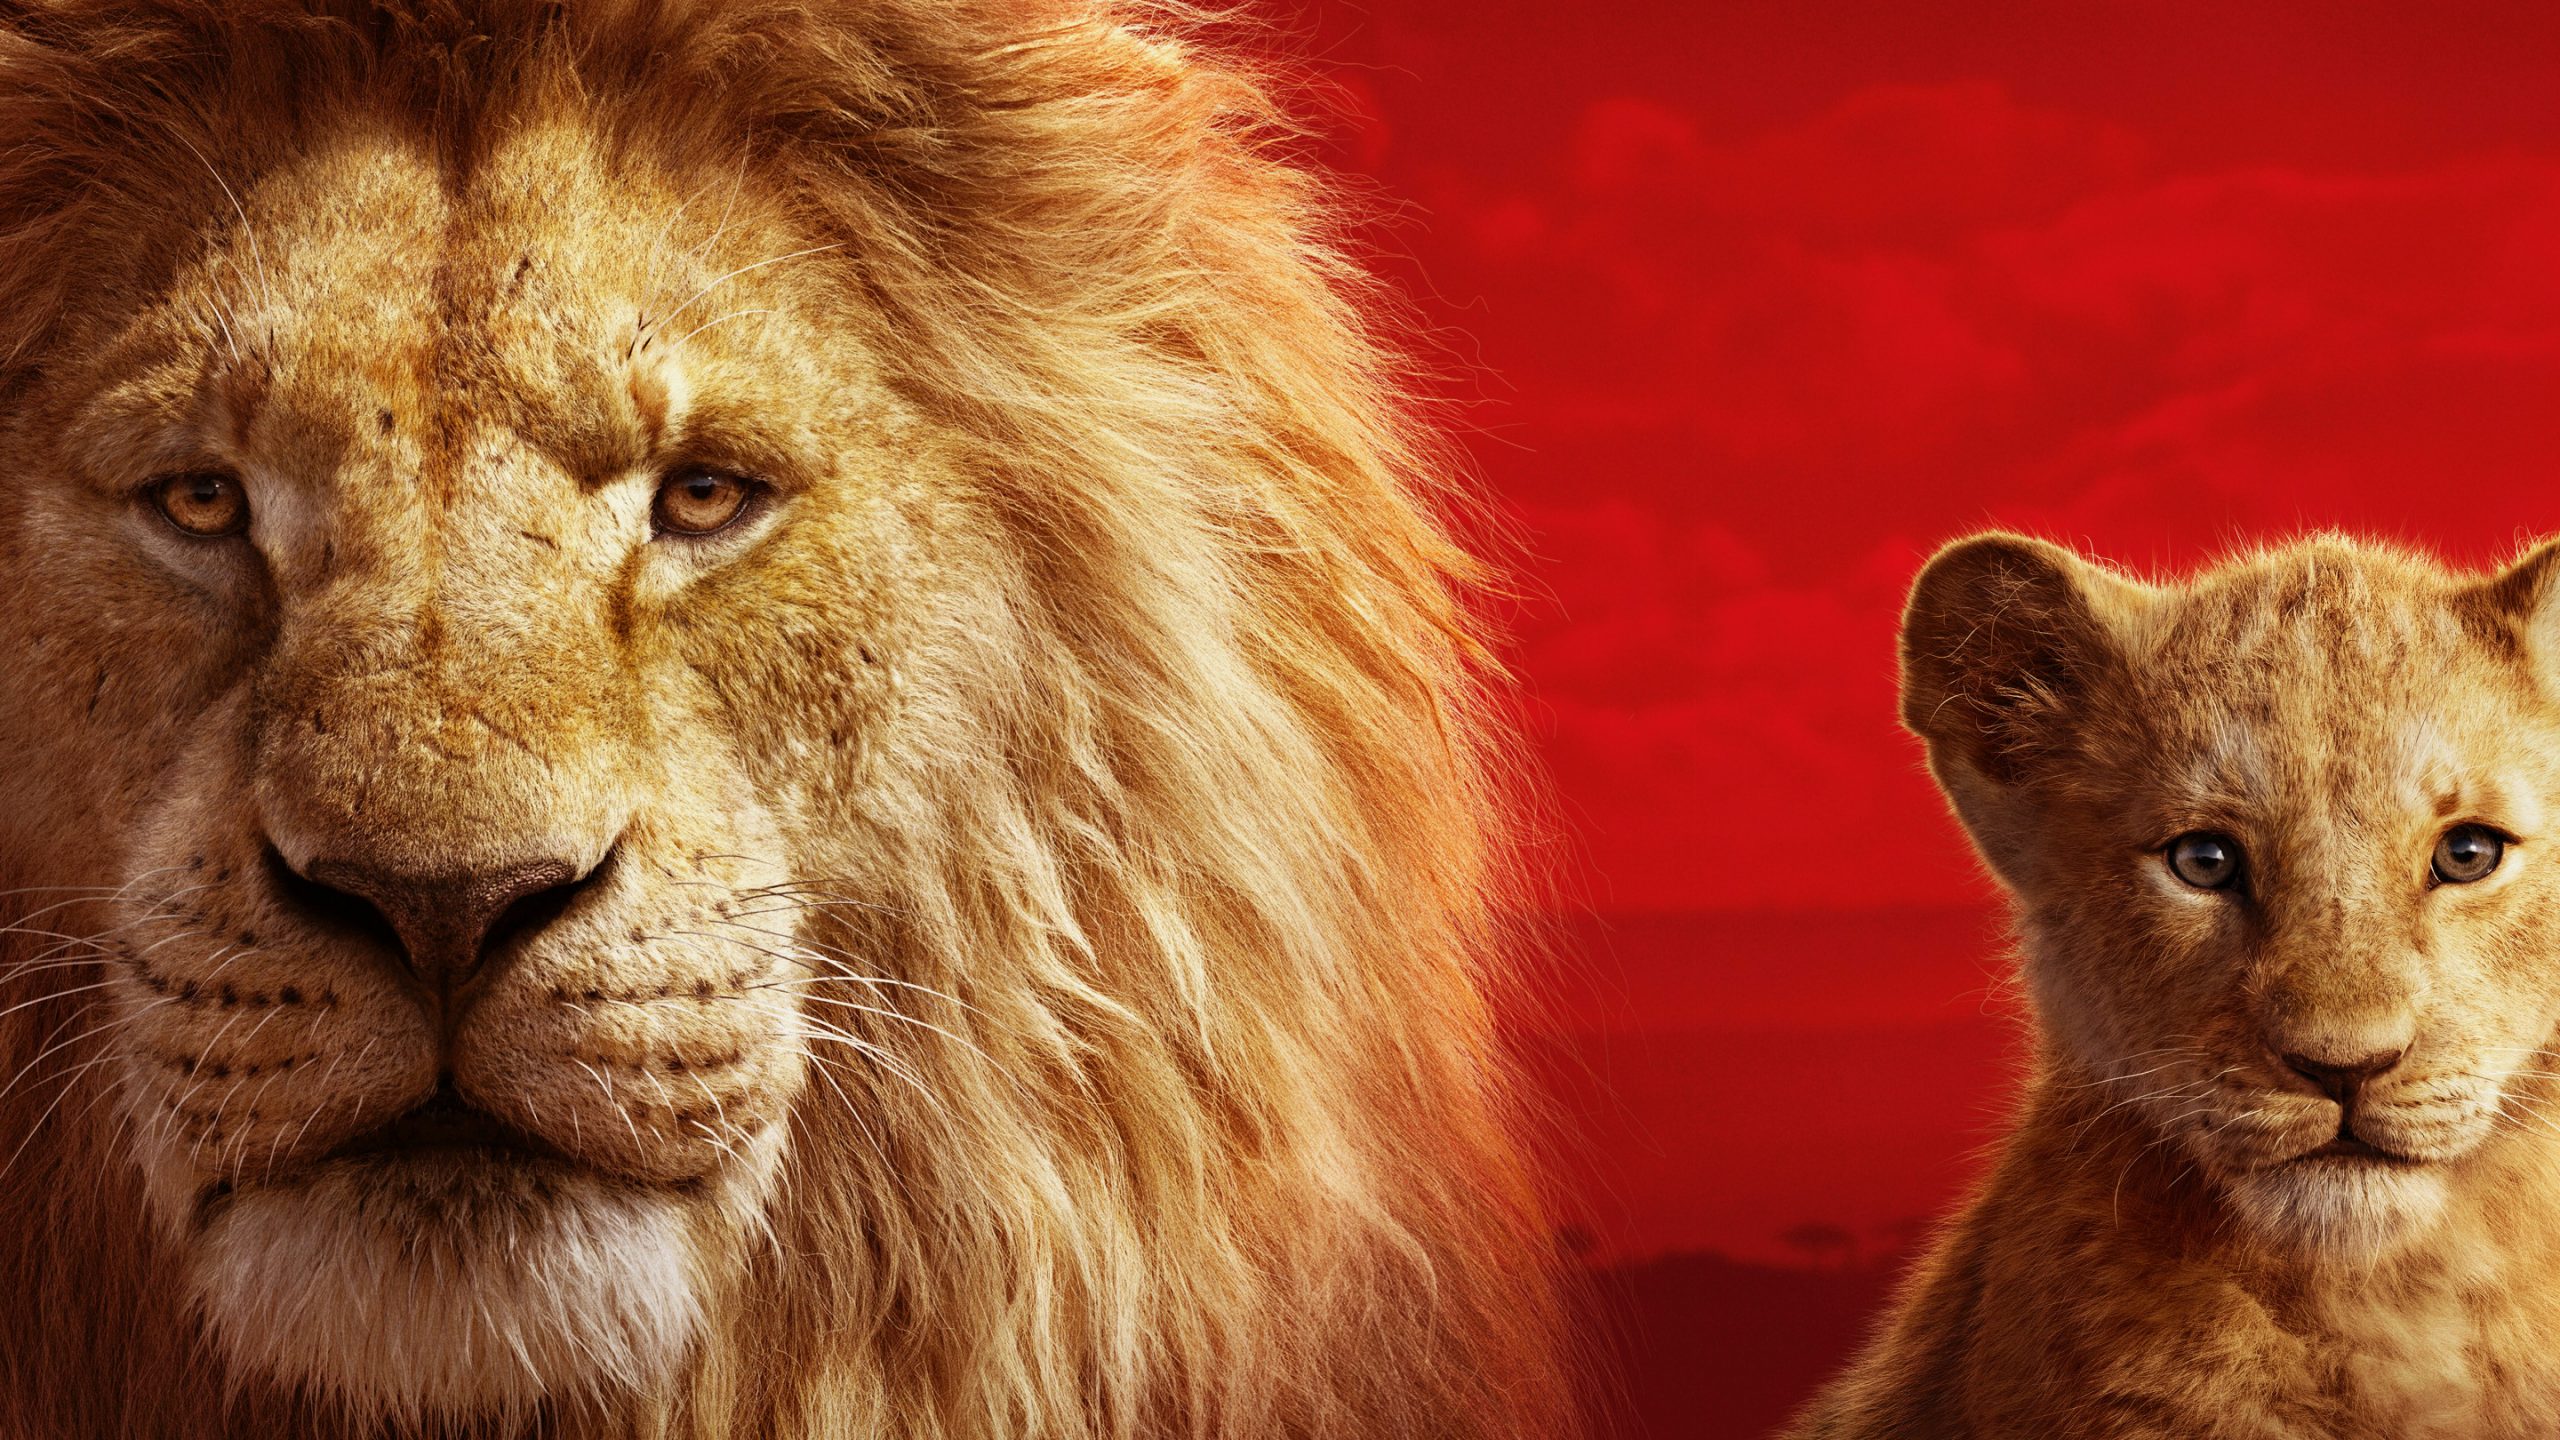 Mufasa The Lion King 2019 - 2560x1440 Wallpaper 